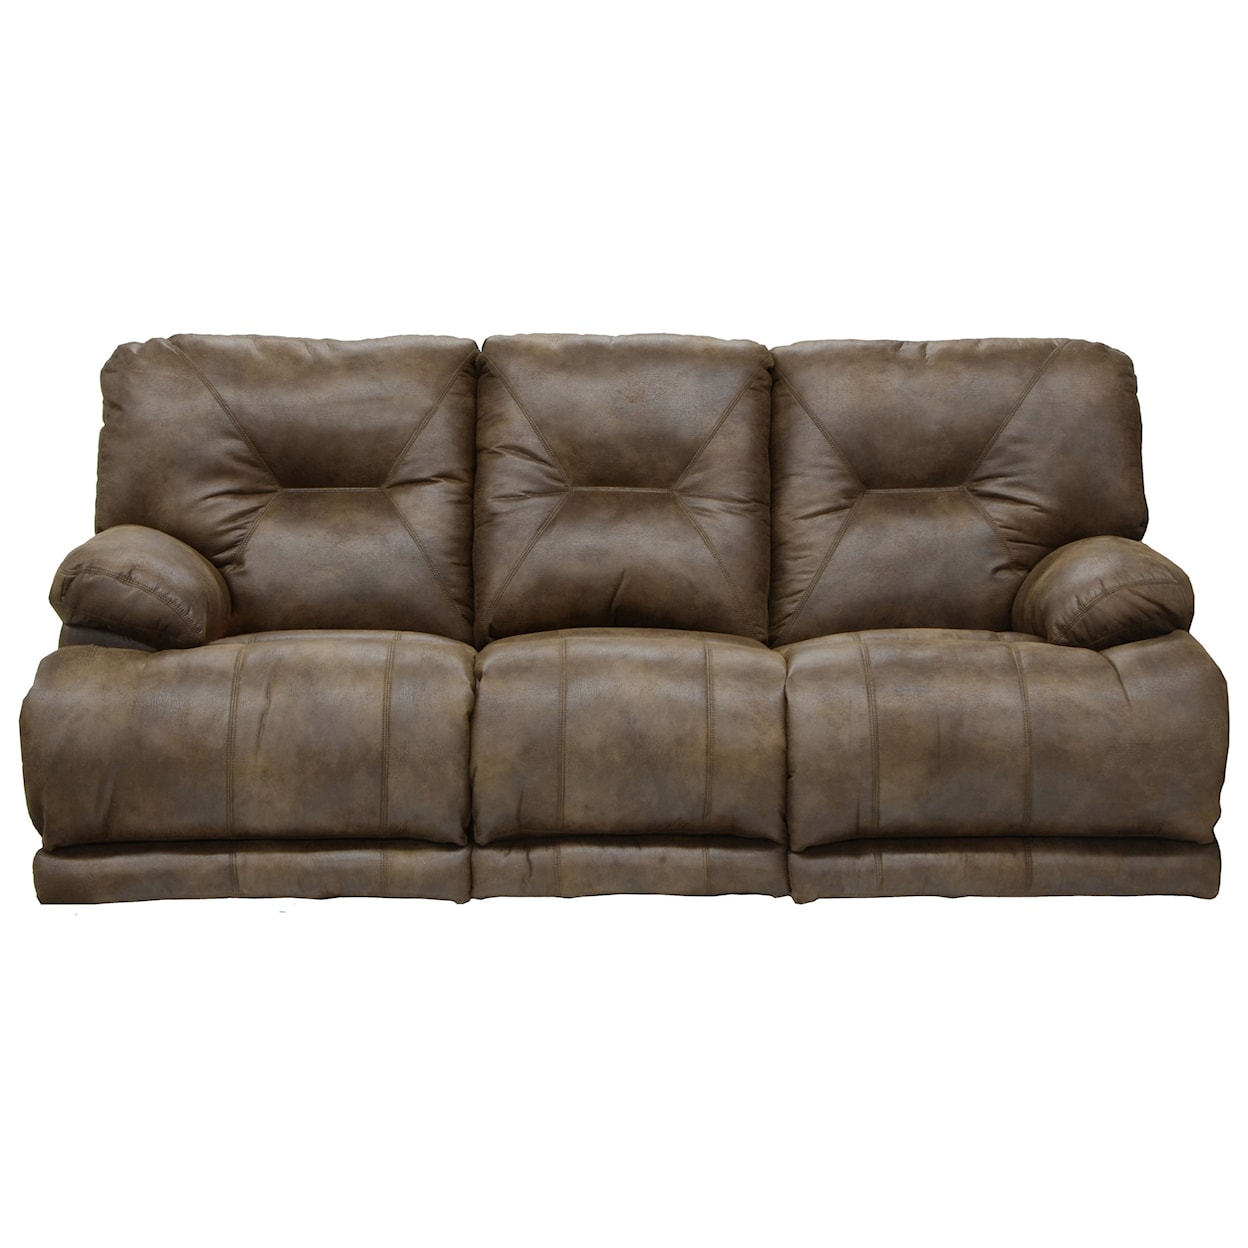 Carolina Furniture 438 Voyager Lay Flat Reclining Sofa